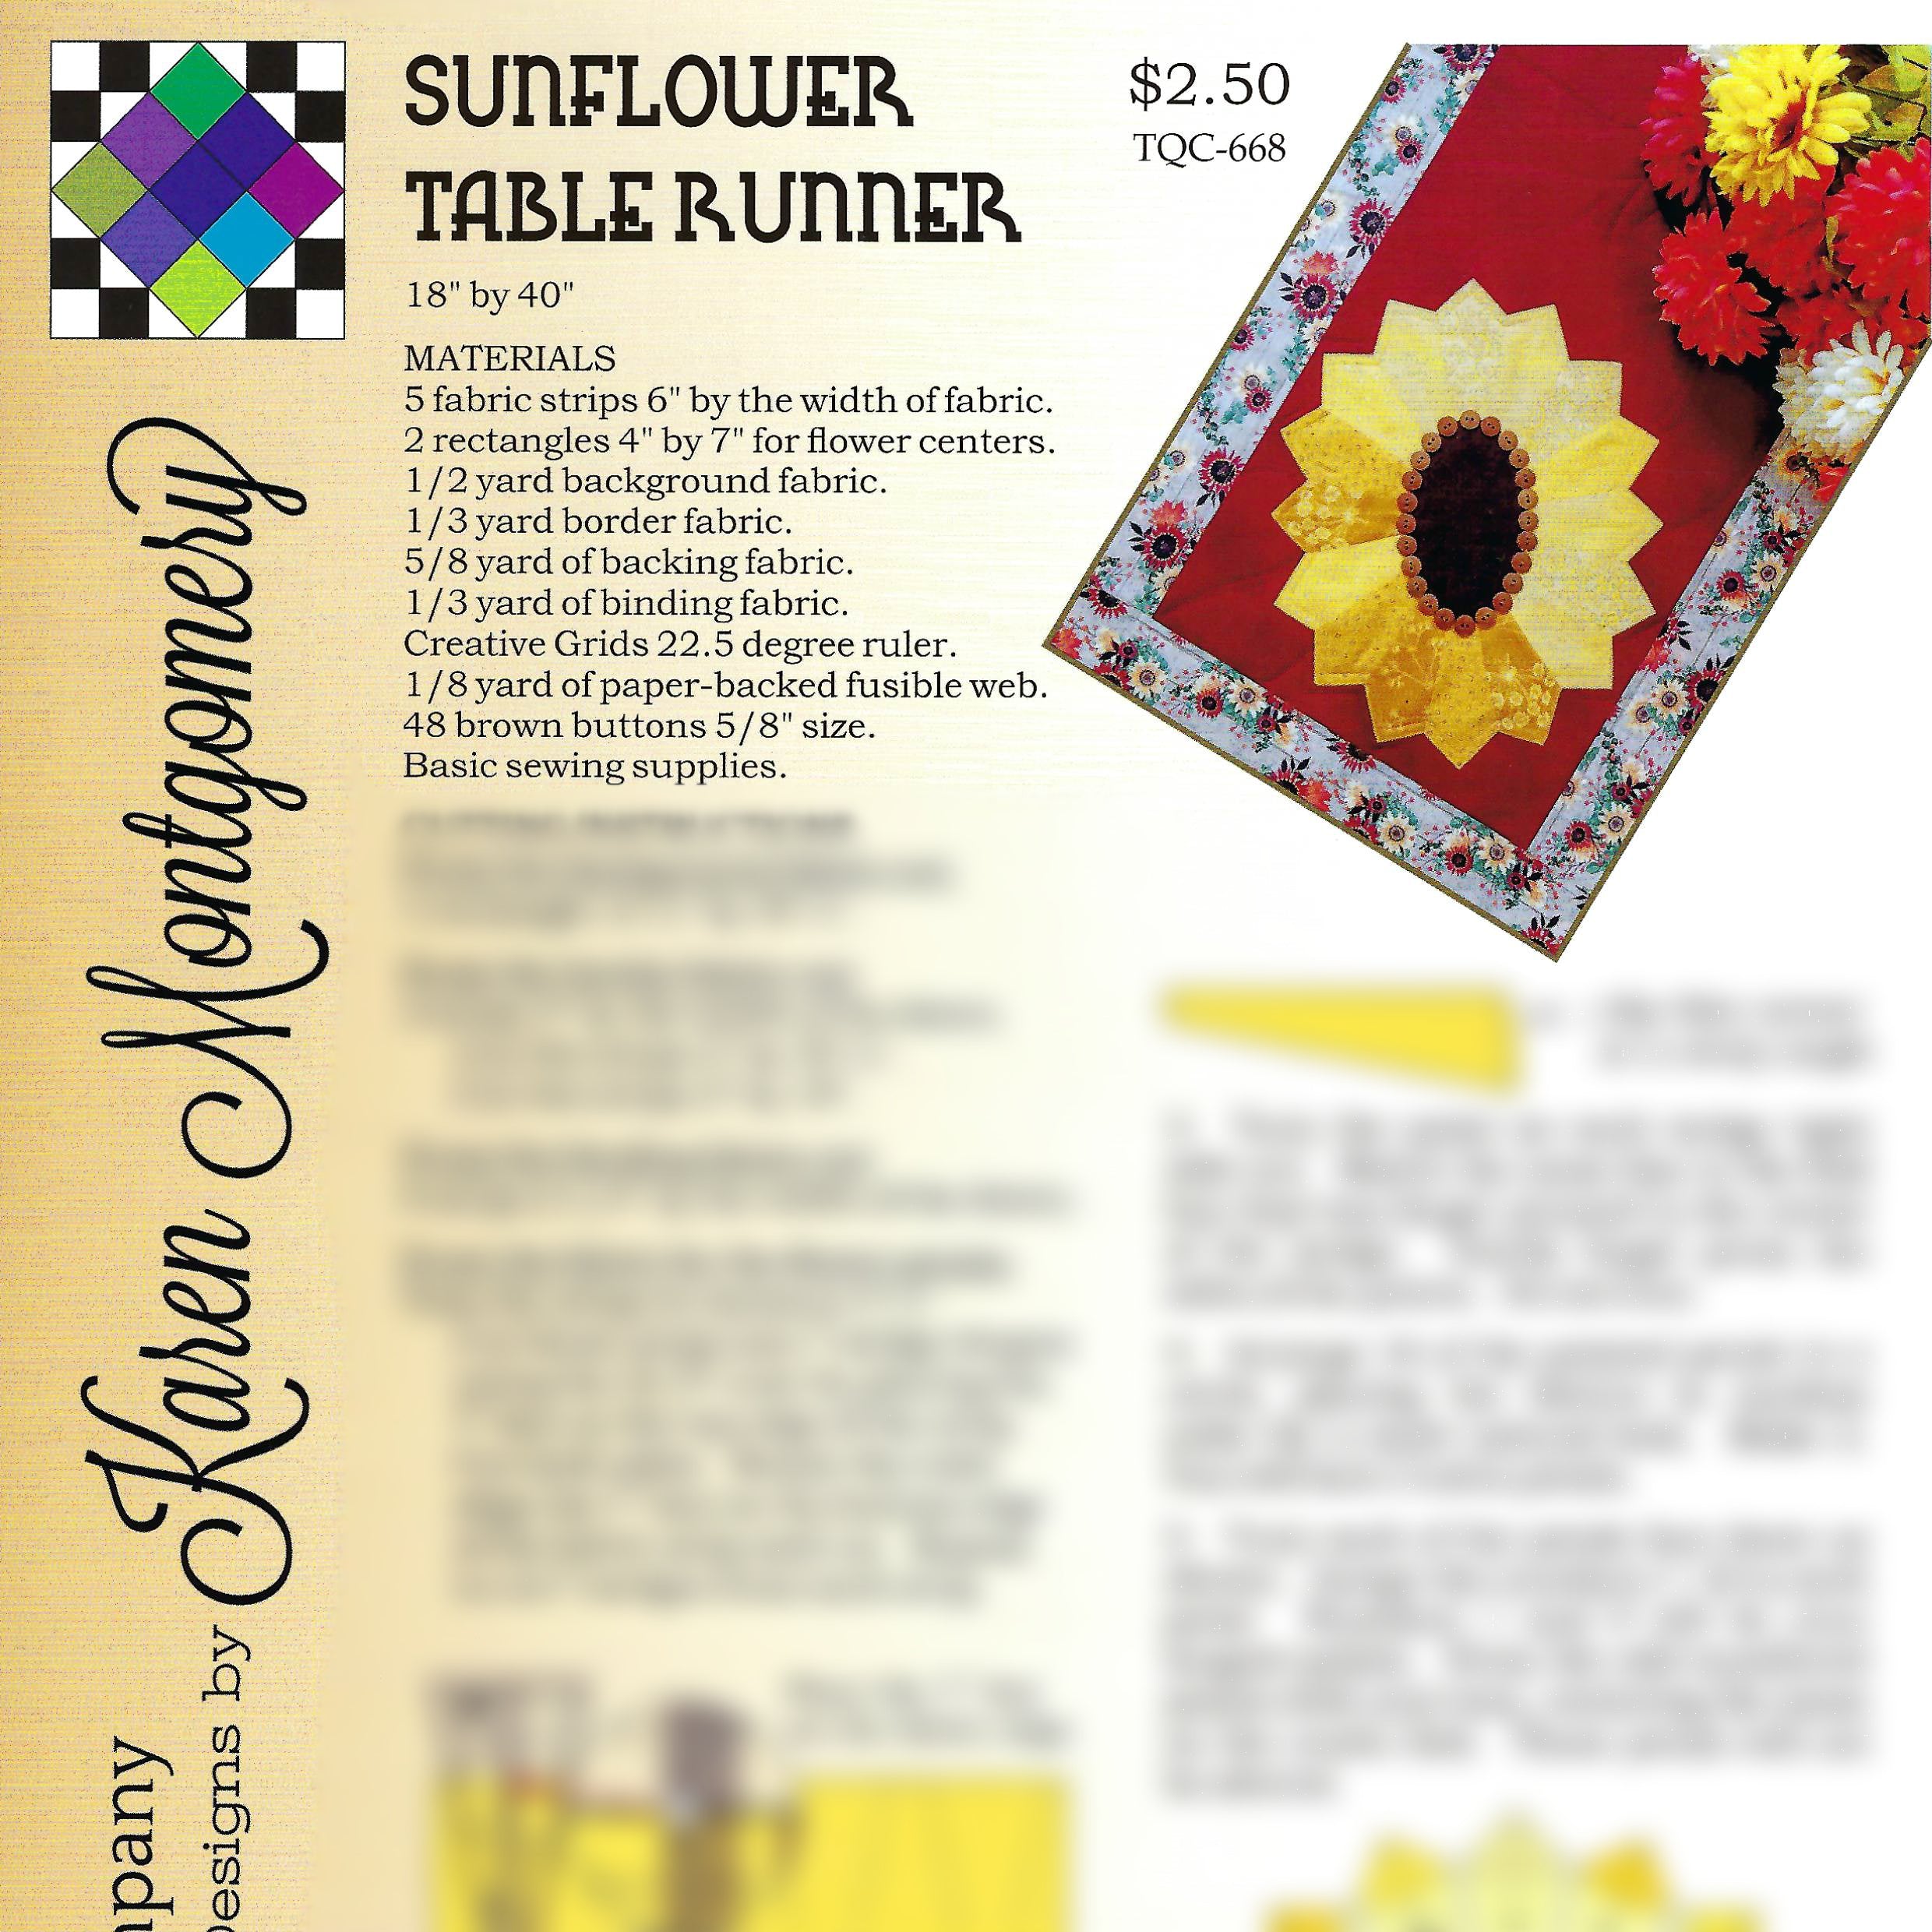 Sunflower Table Runner Project Sheet